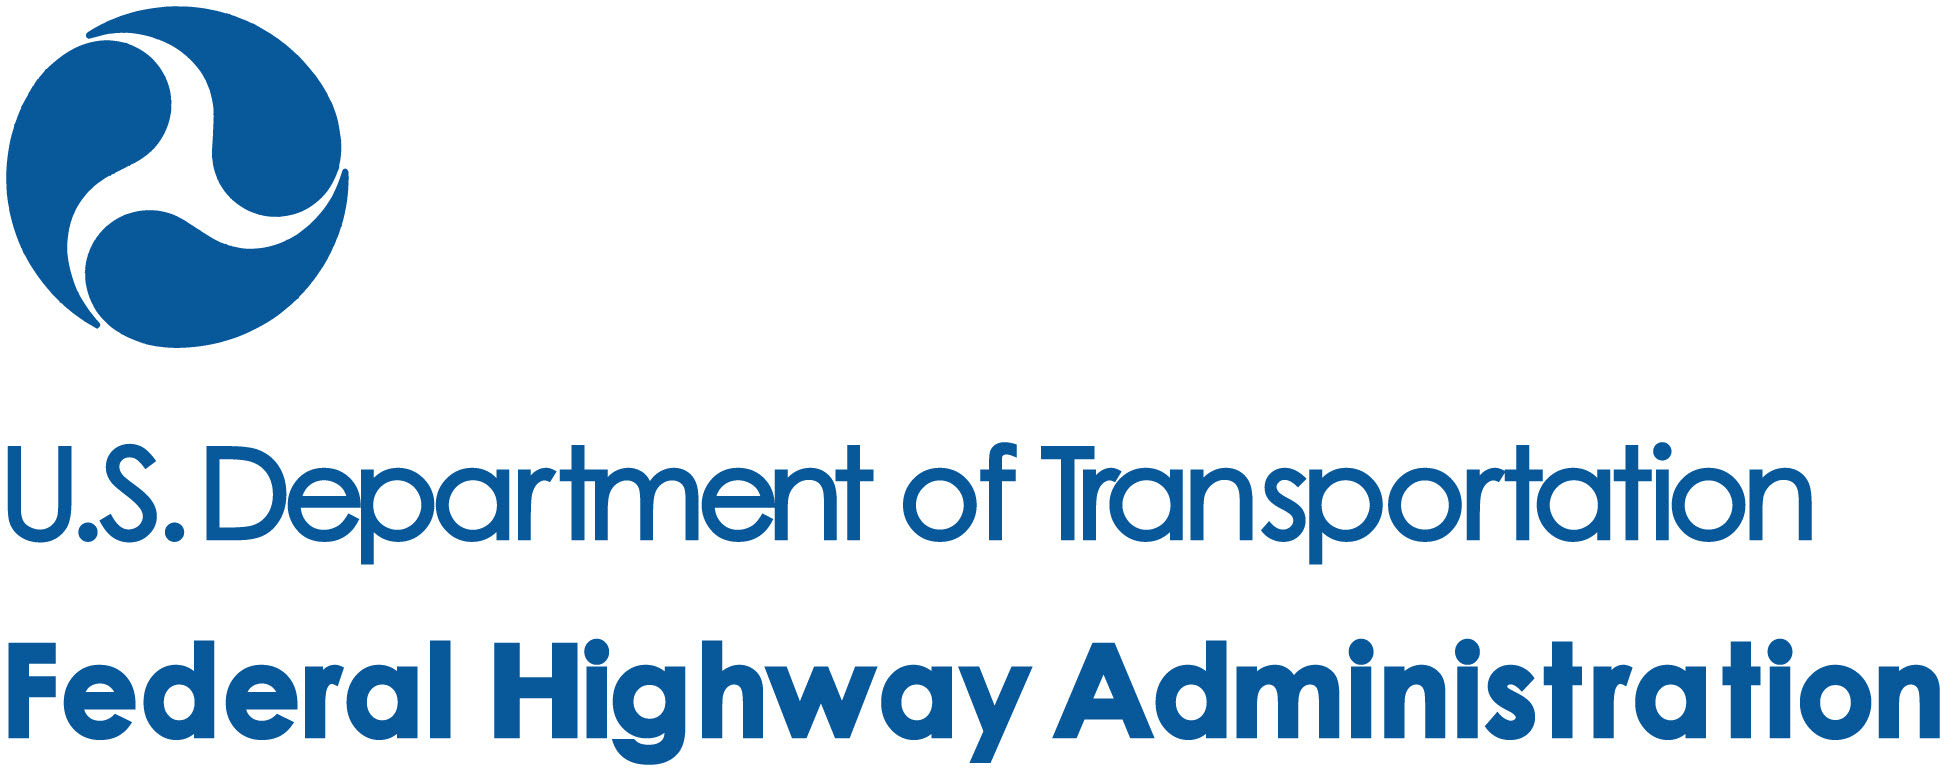 USDOT Federal Highway Administration